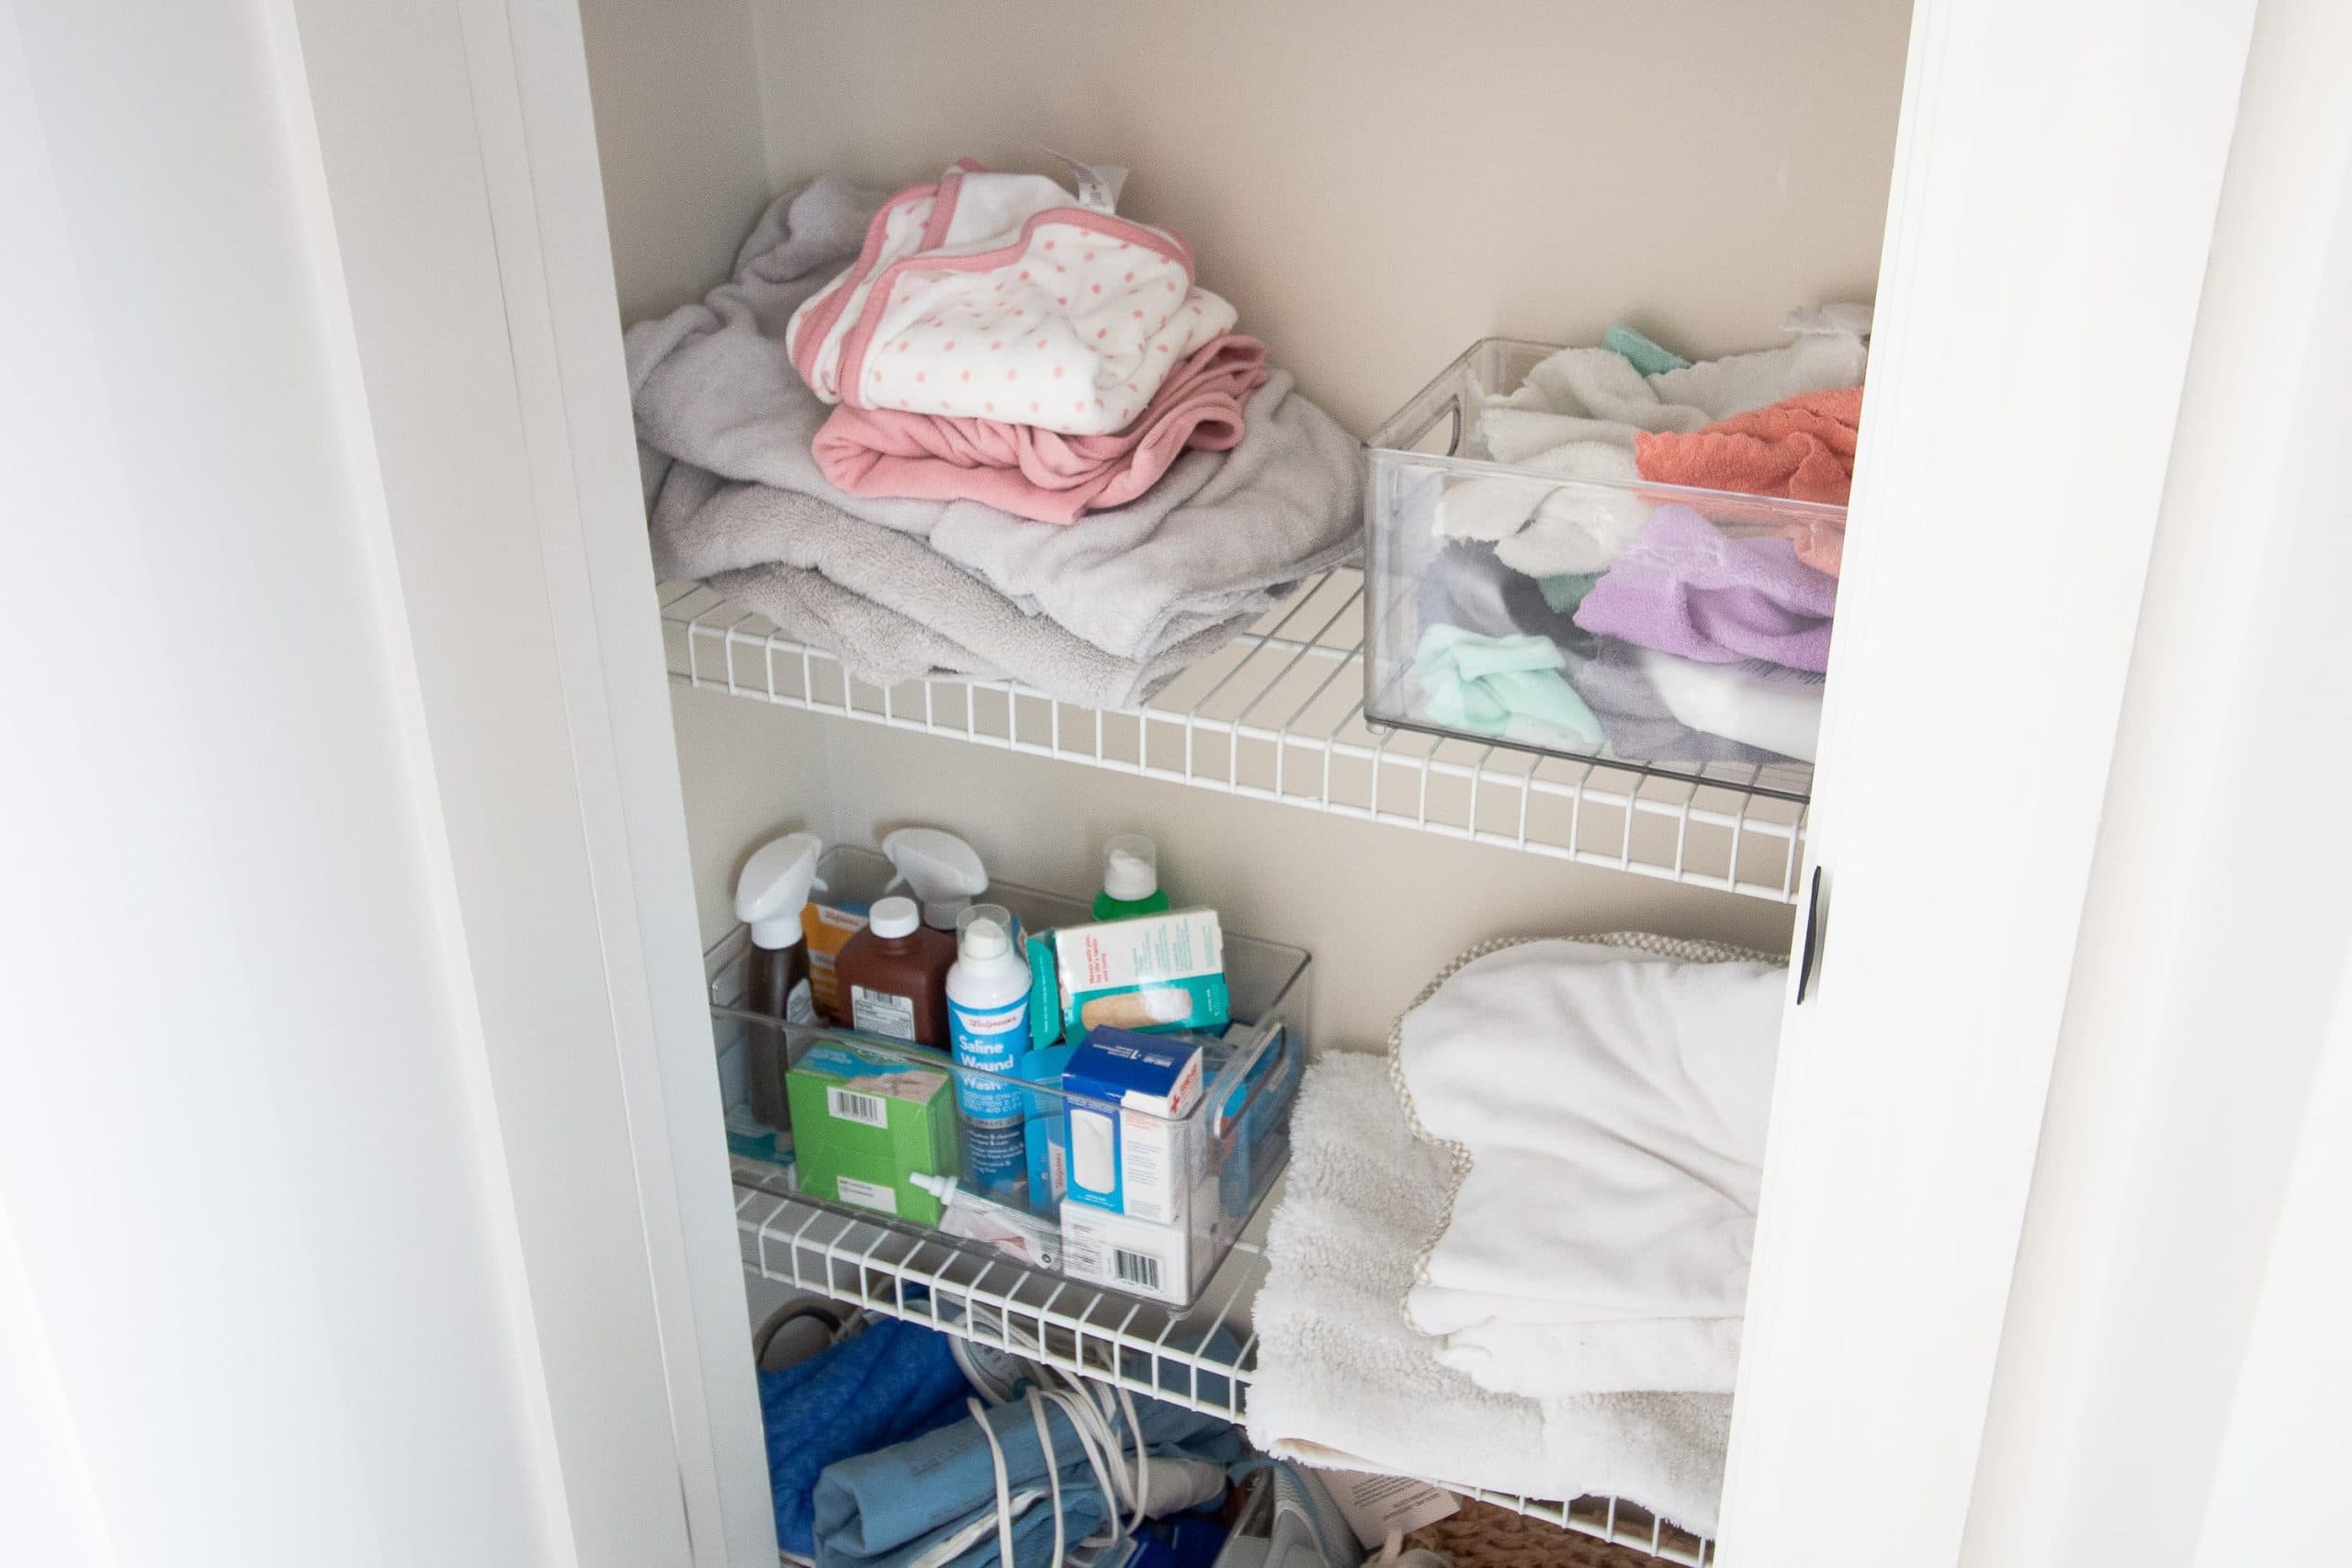 Tips to organize a bathroom closet